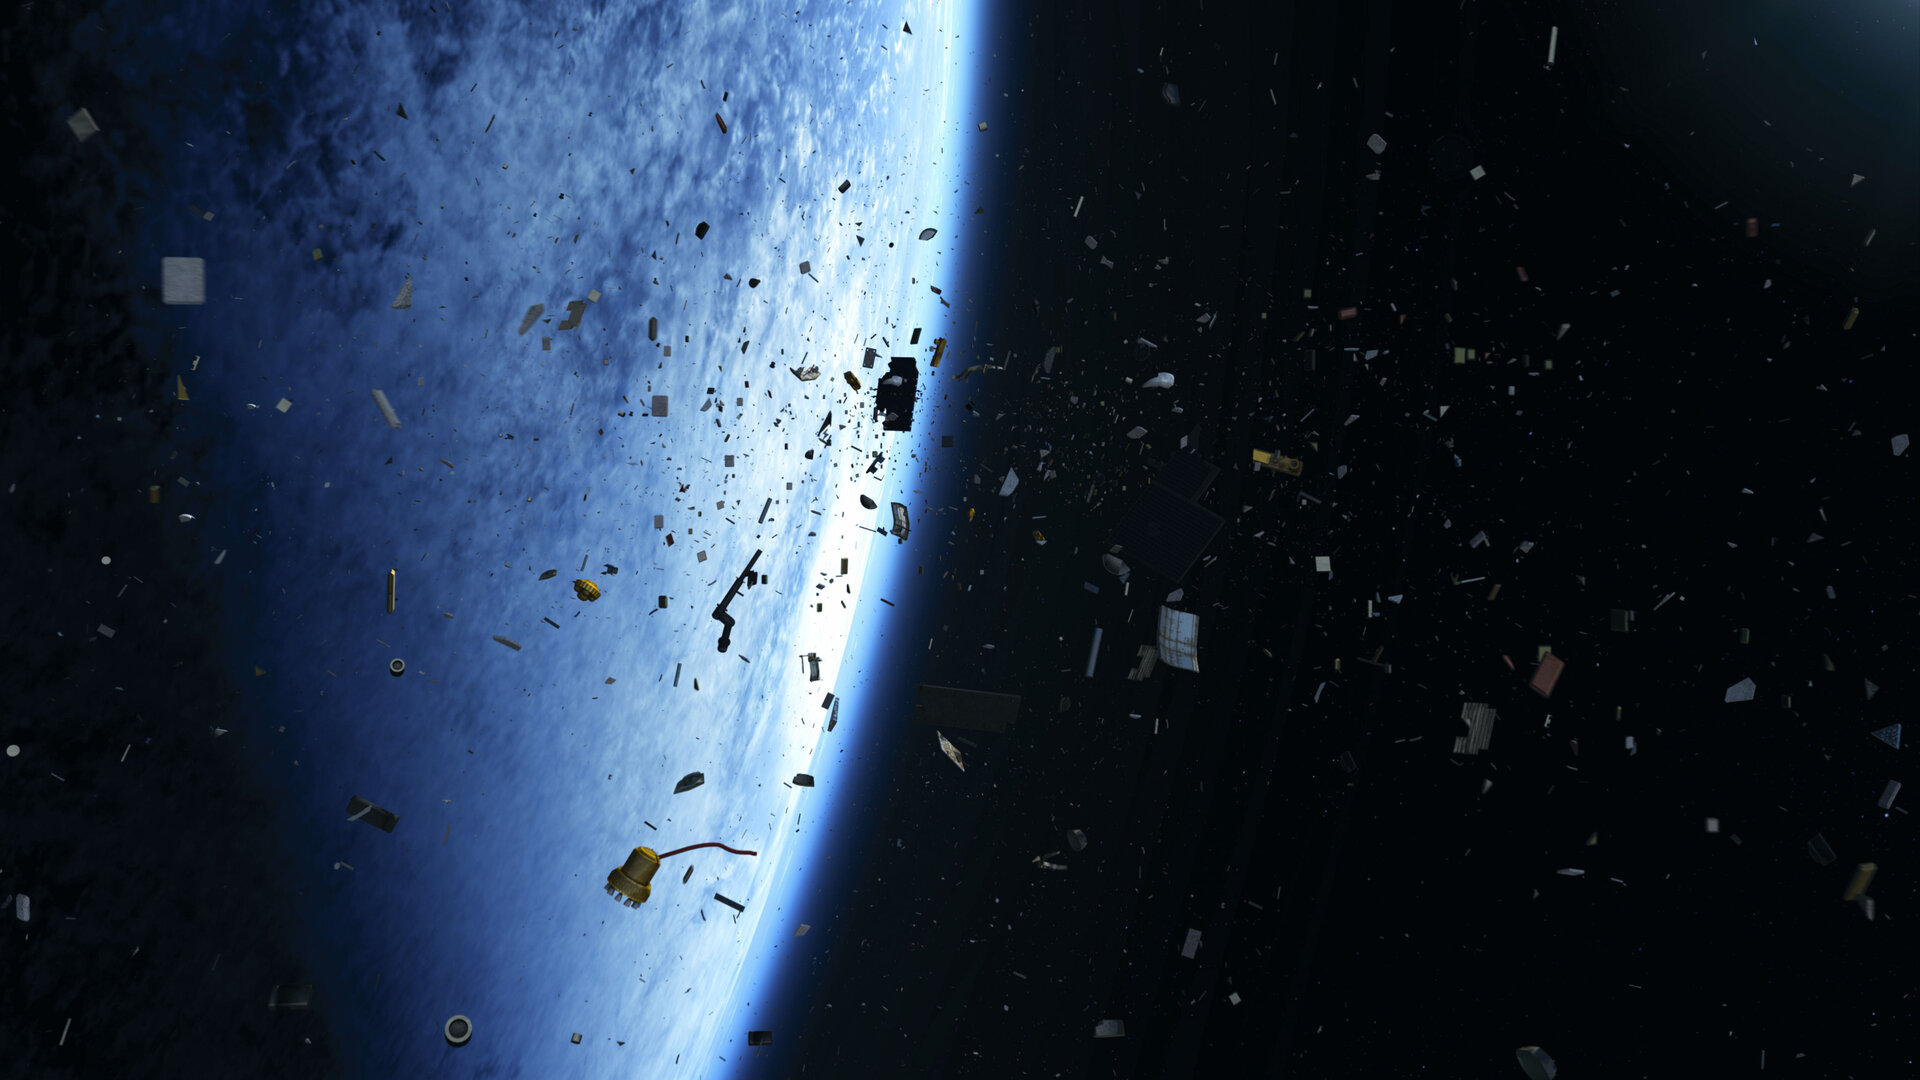 Space debris: Earth’s orbit is getting cluttered